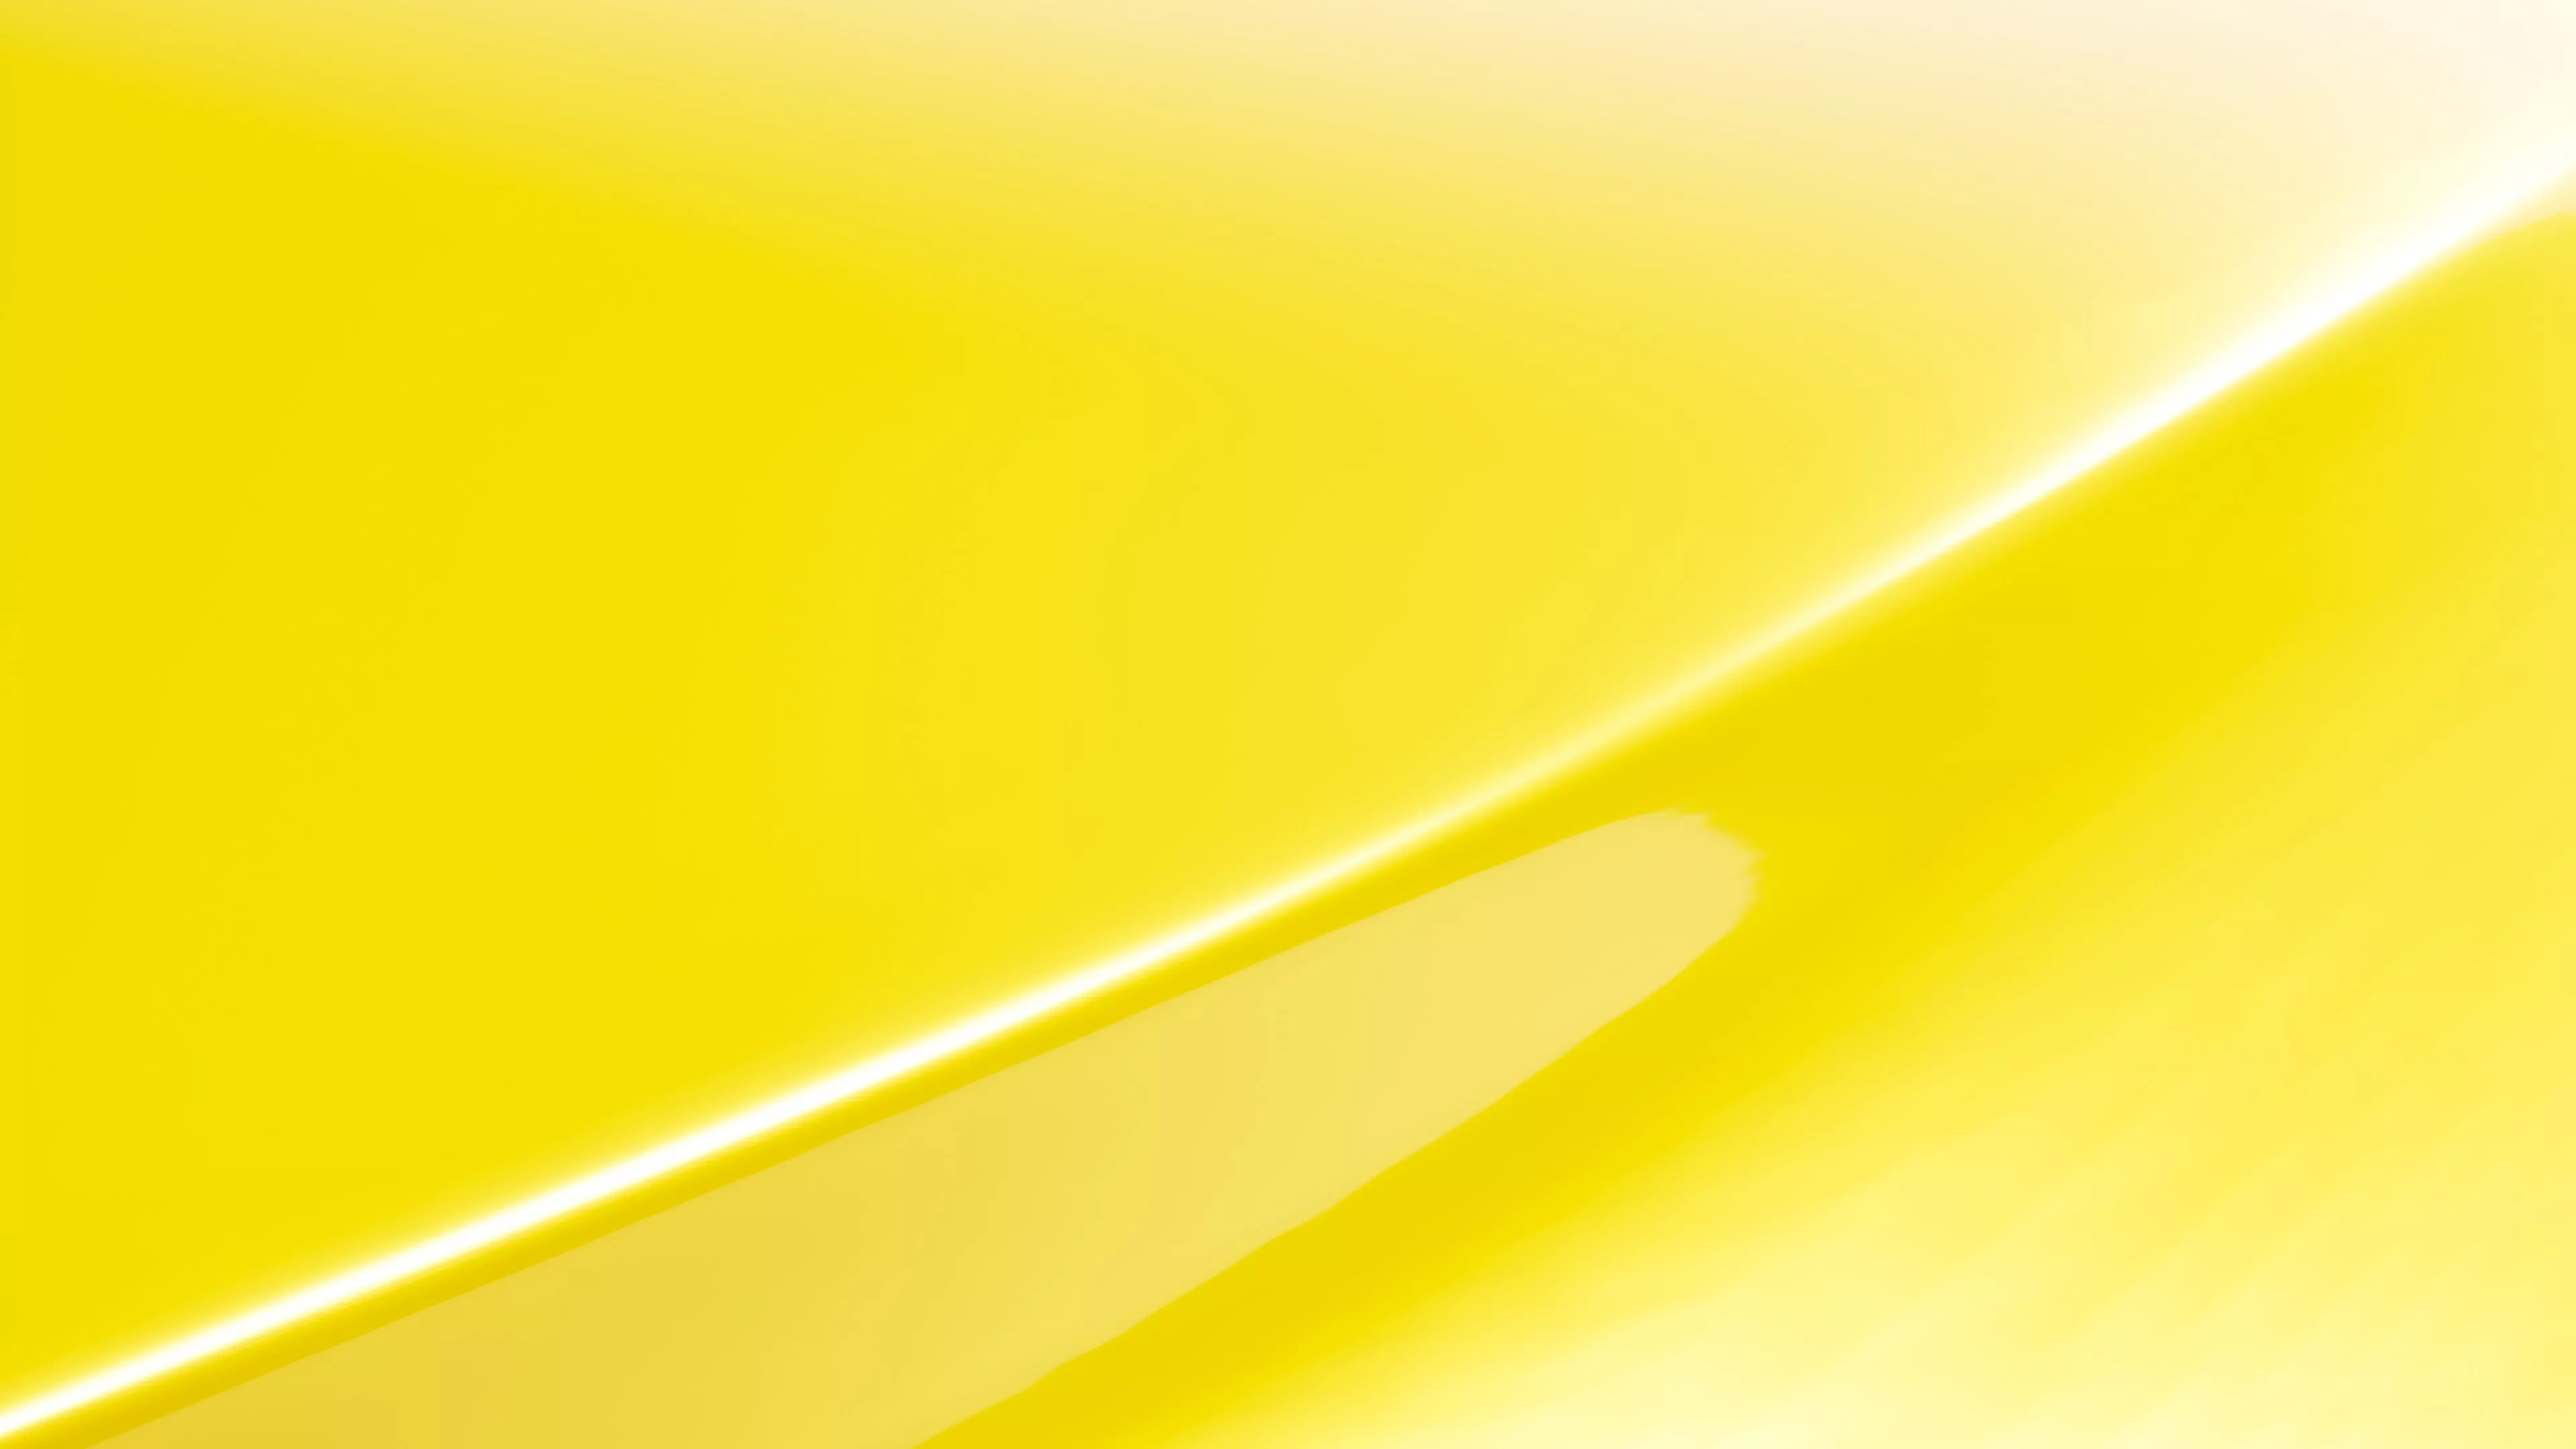 3M™ Wrap Film 2080-HG15 High Gloss Bright Yellow, 60 in x 25 yd / 1524 mm x 22.86 m, 1 Roll/Case